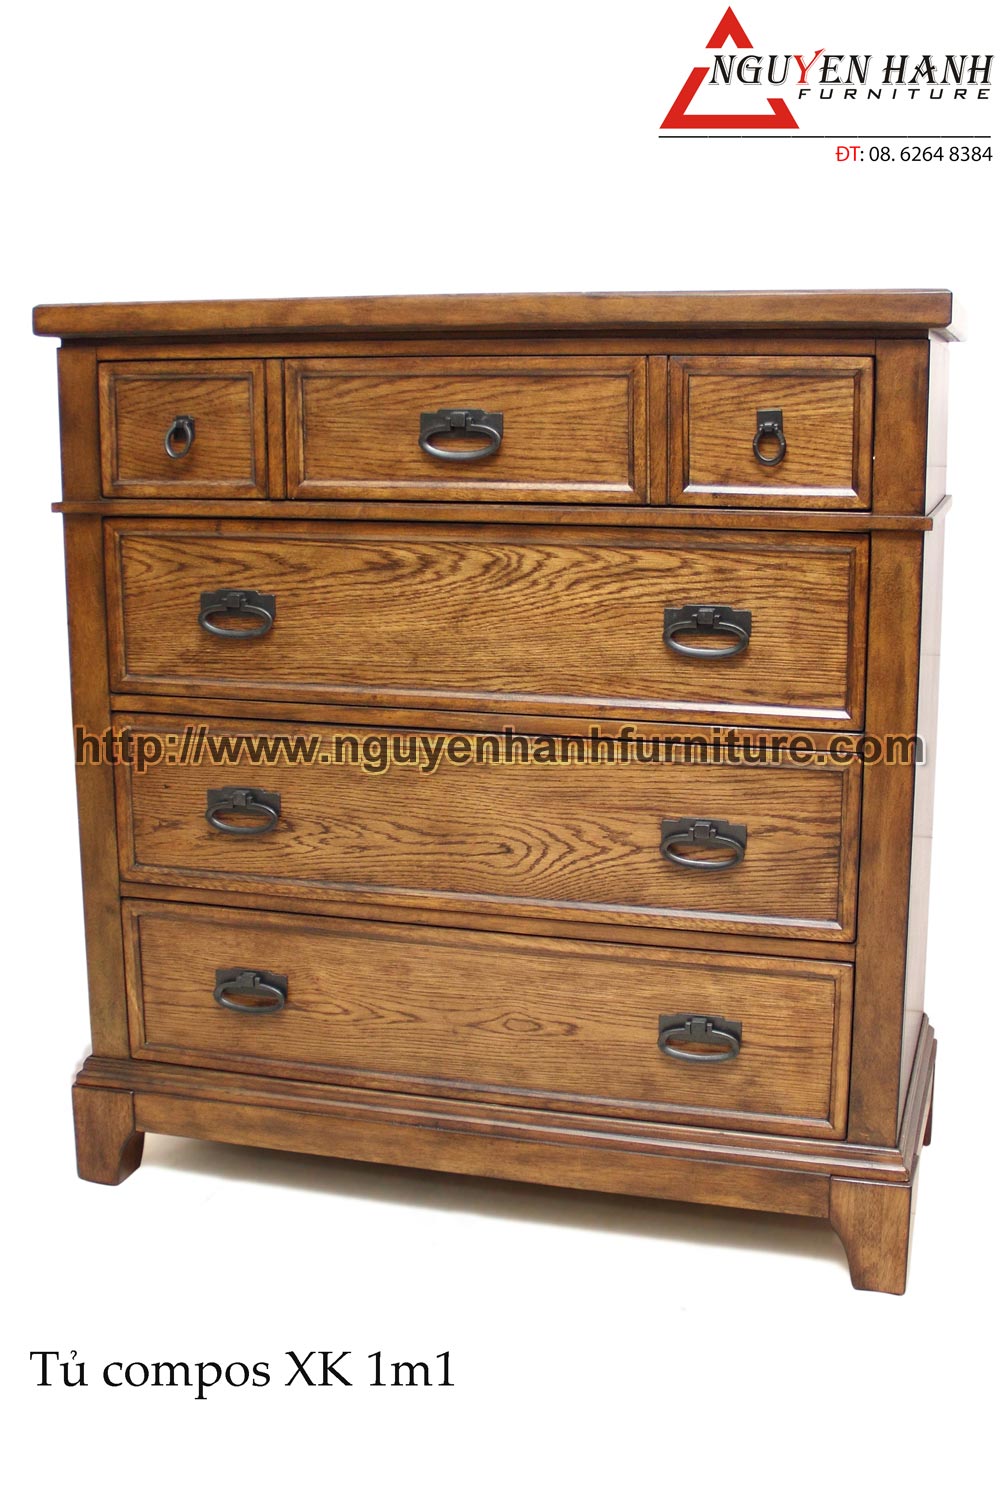 Name product: 1m1 Export-standard compos Drawers Cabinet- Dimensions: 46 x 100 x 110cm - Description: Oak wood, Rubber wood